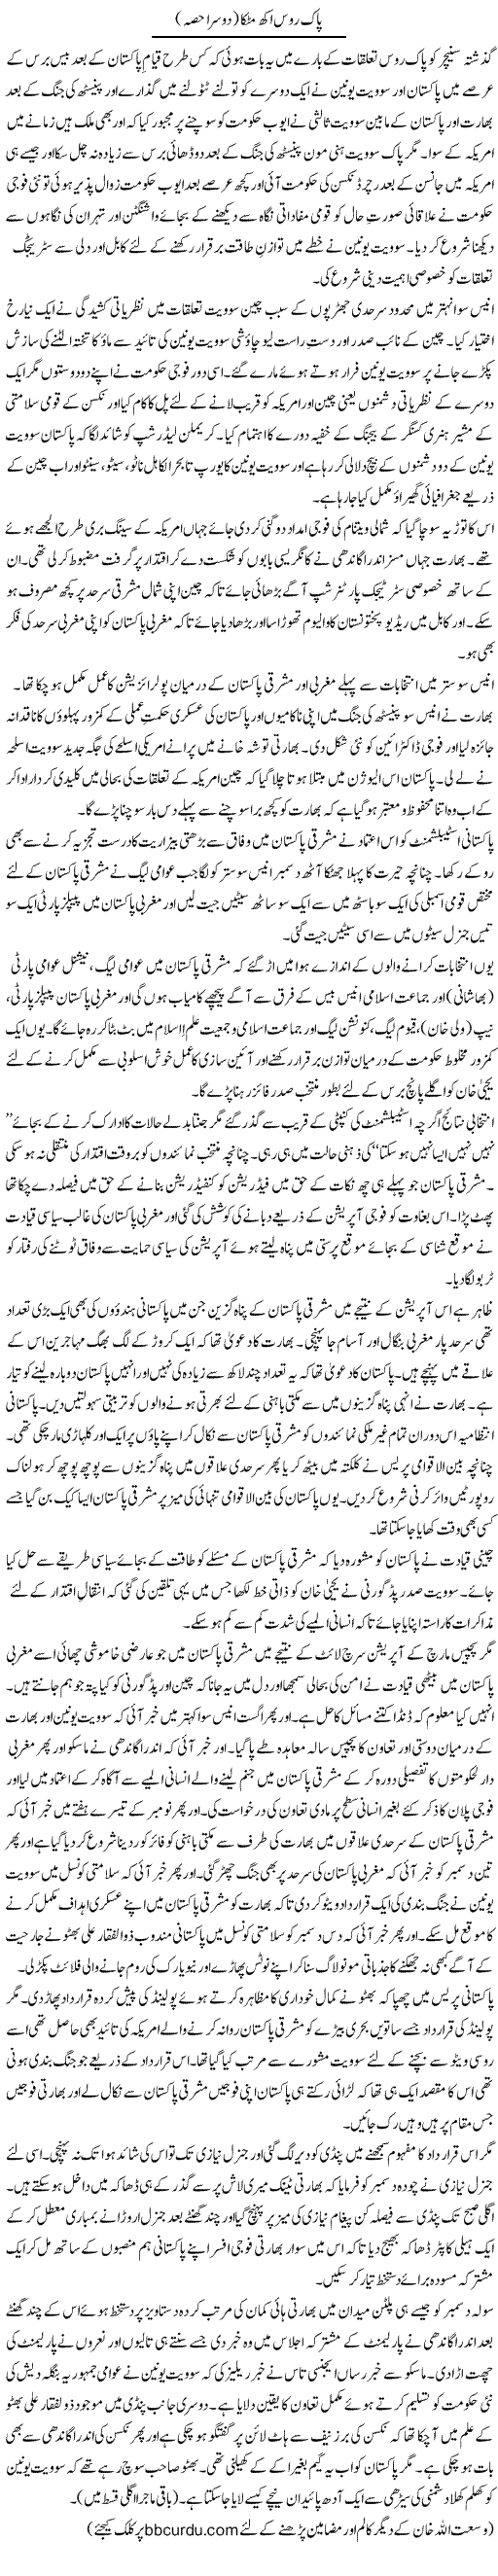 Pak Roos Akh Matakka (2) | Wusat Ullah Khan | Daily Urdu Columns